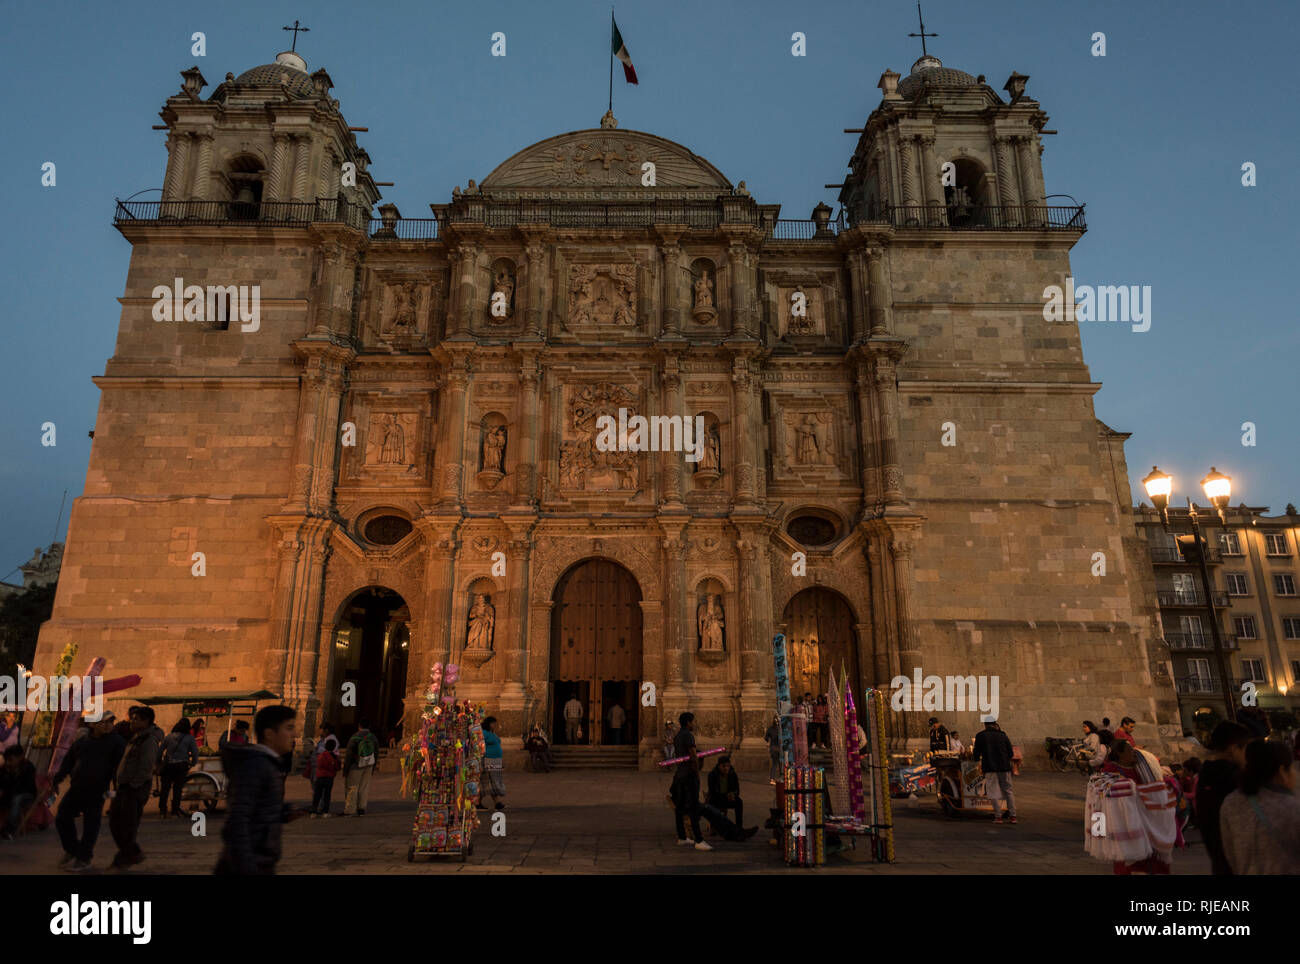 cathedral, church, religion, catholic, Lady of the Assumption, XVIth, 16th, century, architecture, Oaxaca, Mexico, night shot, balloons, vendors Stock Photo